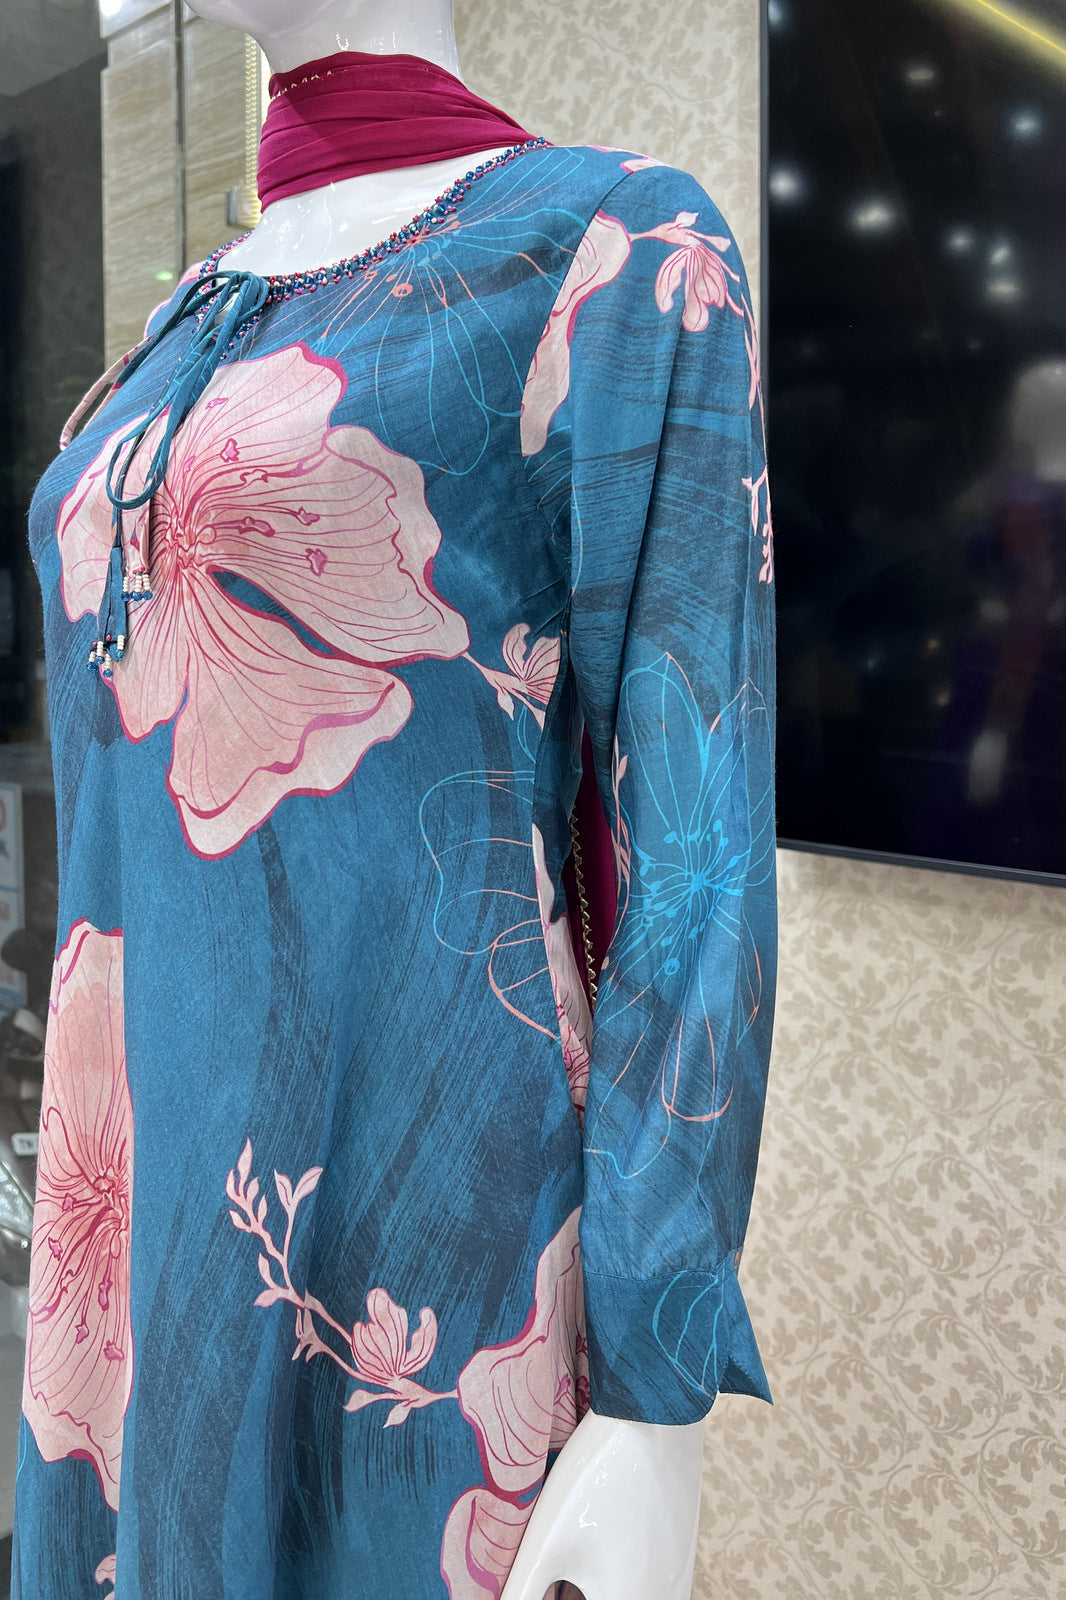 Indigo Blue Floral Print and Beads work Umbrella Styled Salwar Suit